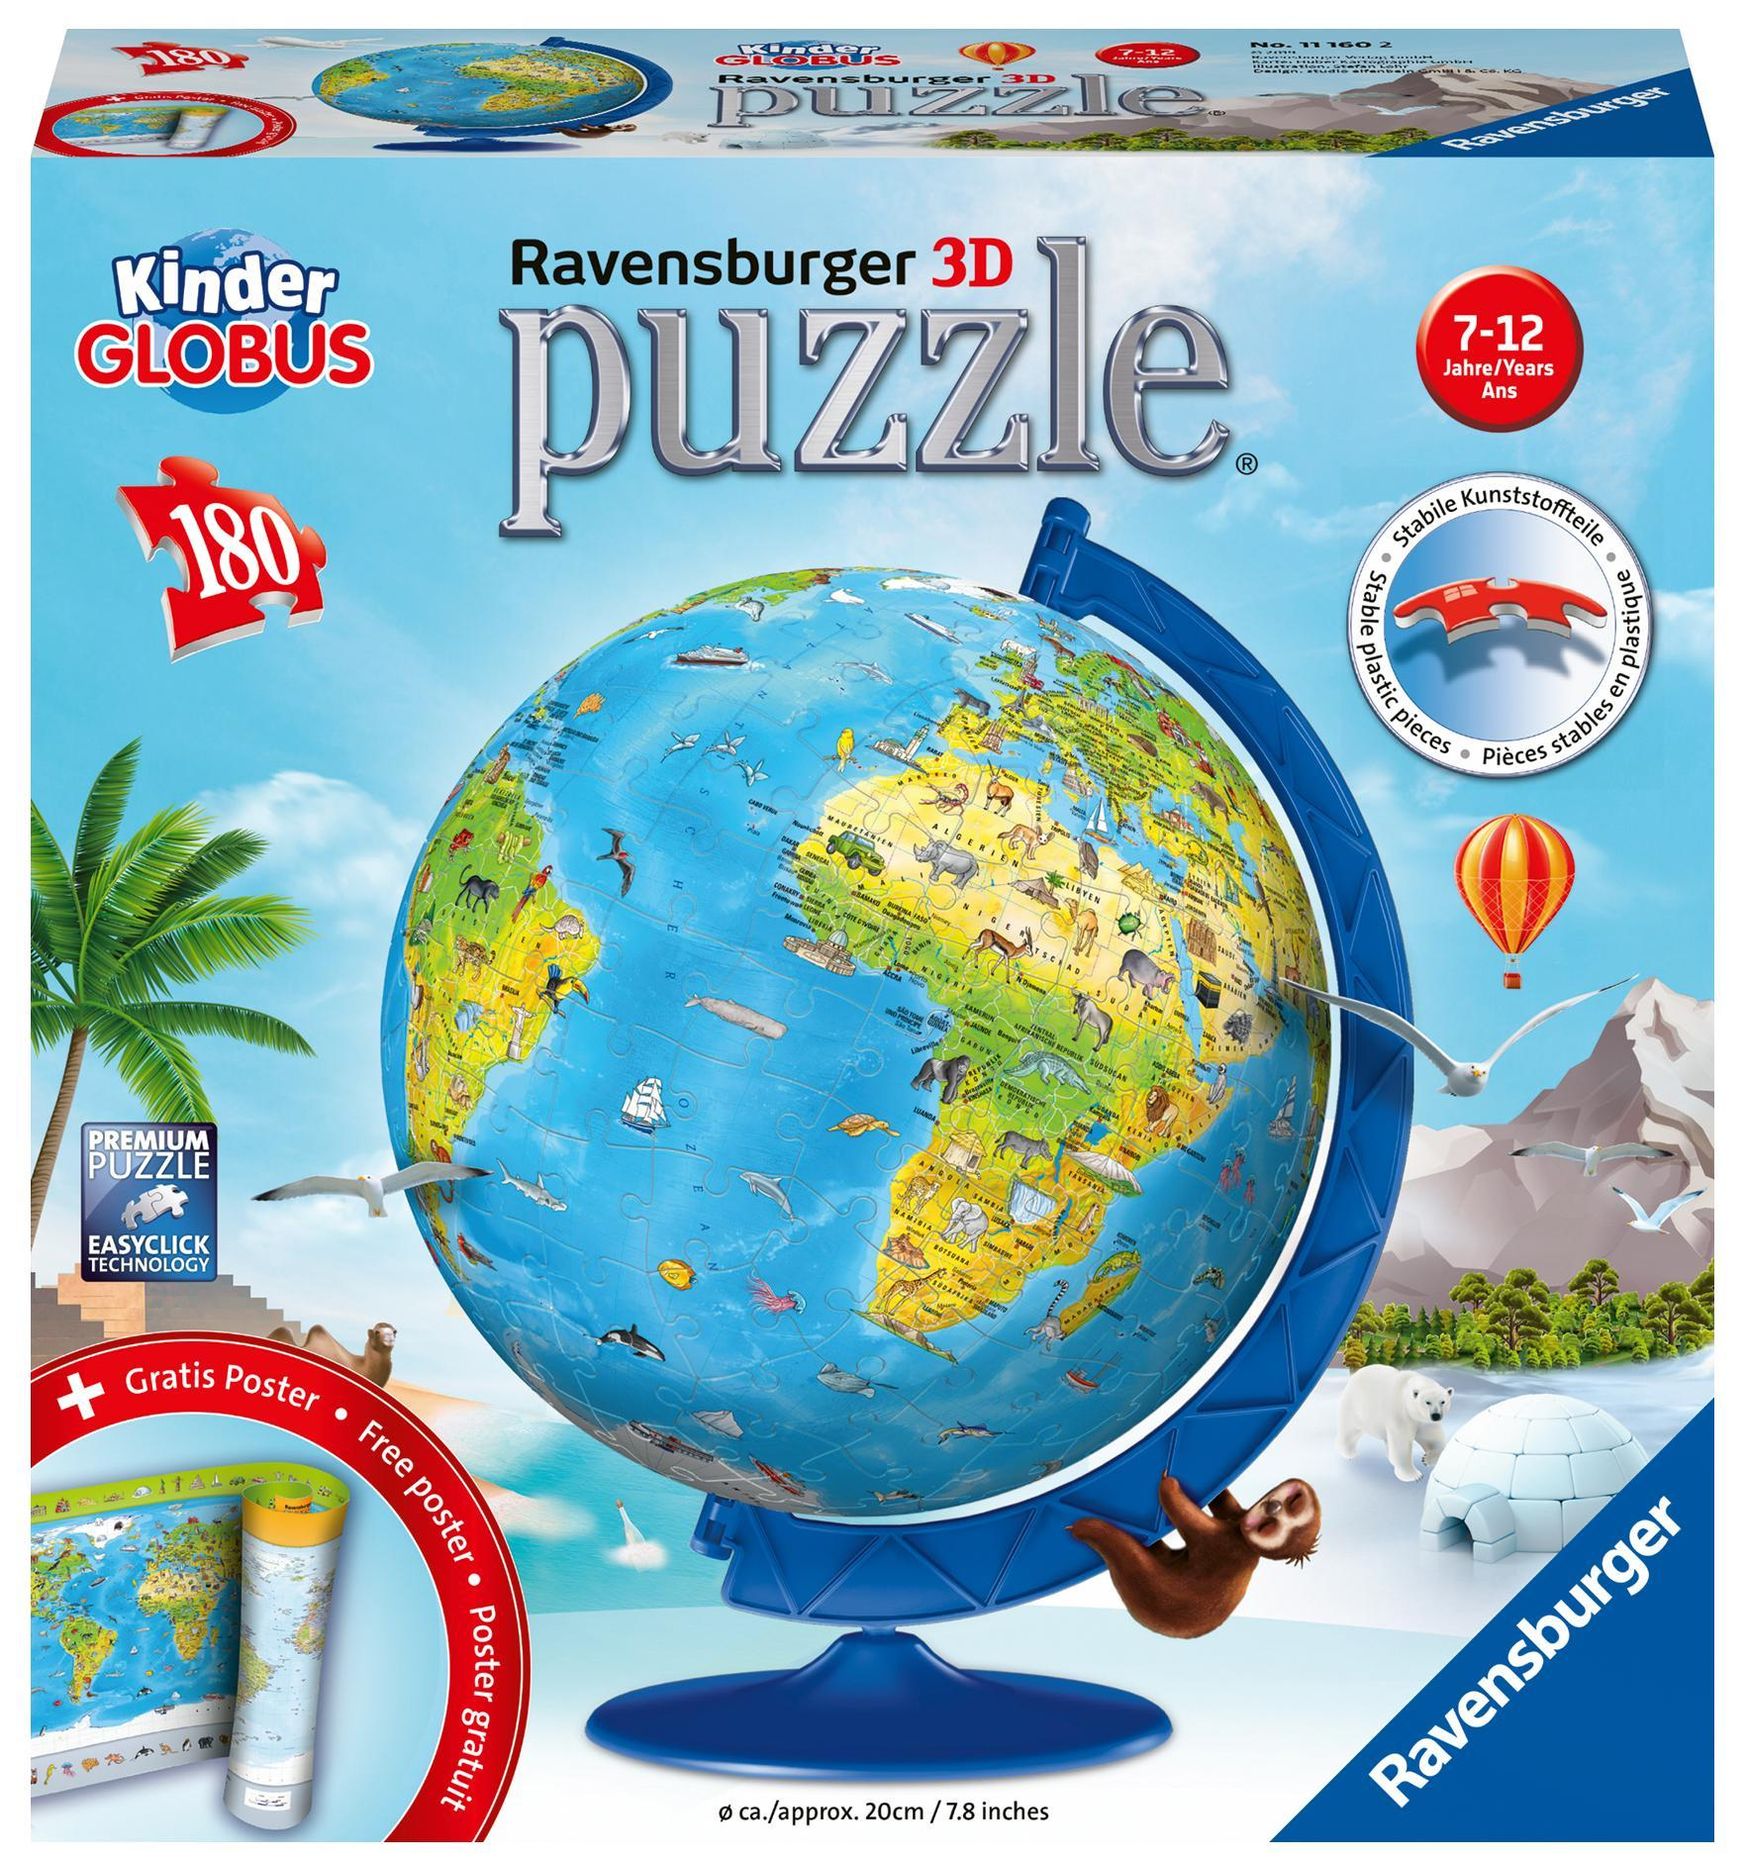 Ravensburger 3D Puzzle 11160 - Puzzle-Ball Kinderglobus in deutscher  Sprache - 180 Teile - Puzzle-Ball Globus für Kinder | Weltbild.de